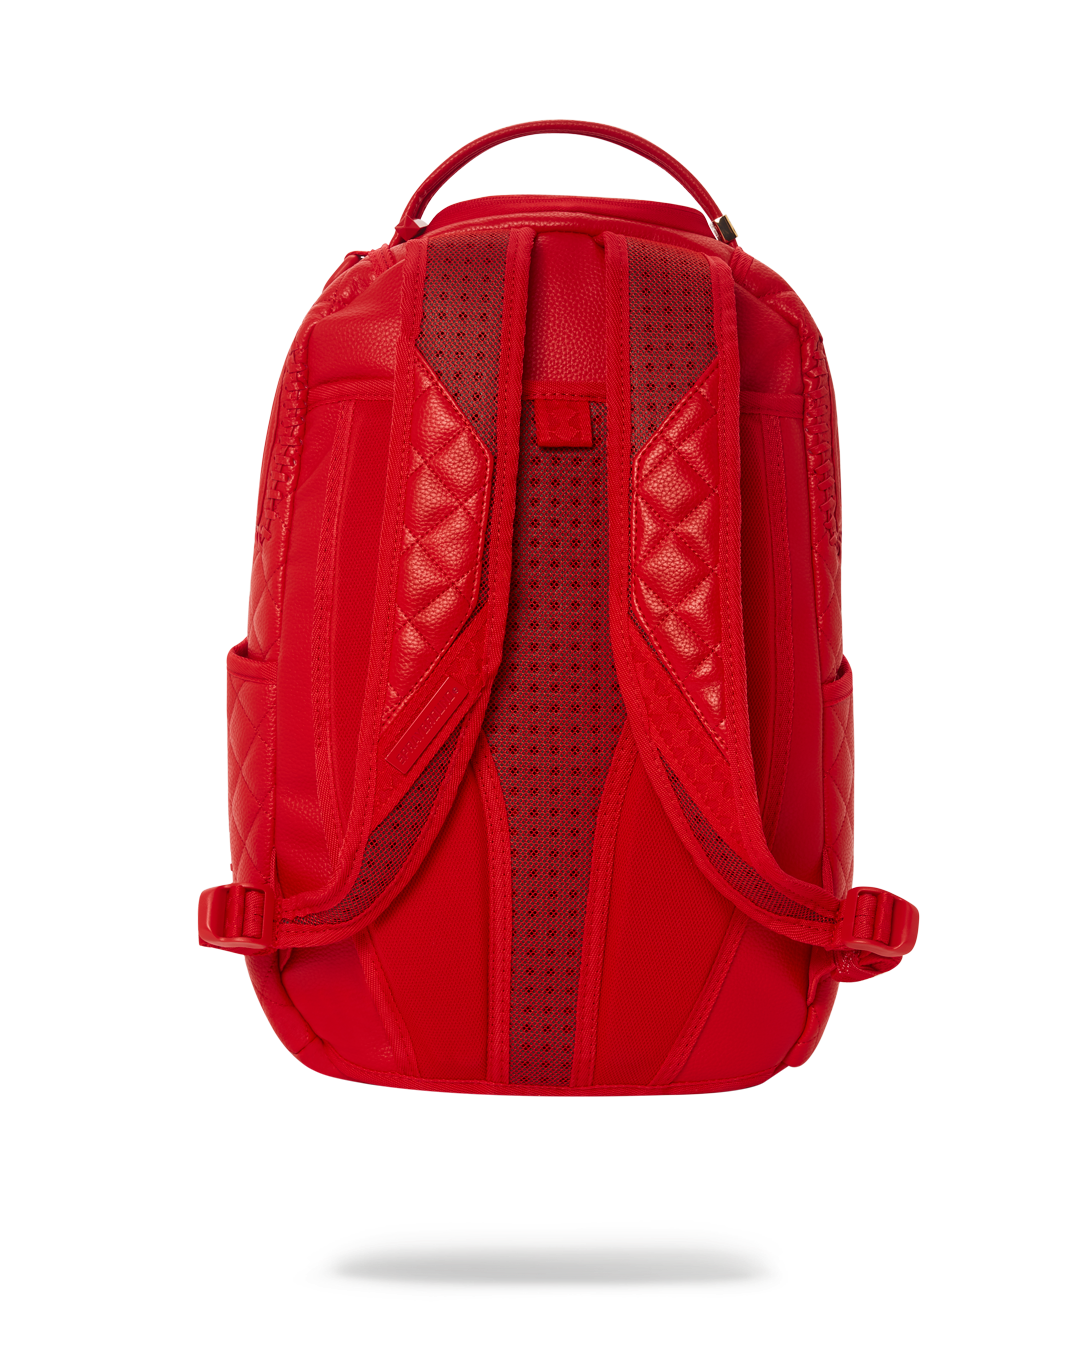 Backpack Sprayground SPLIT RIVIERA DLXSVF BACKPACK Red